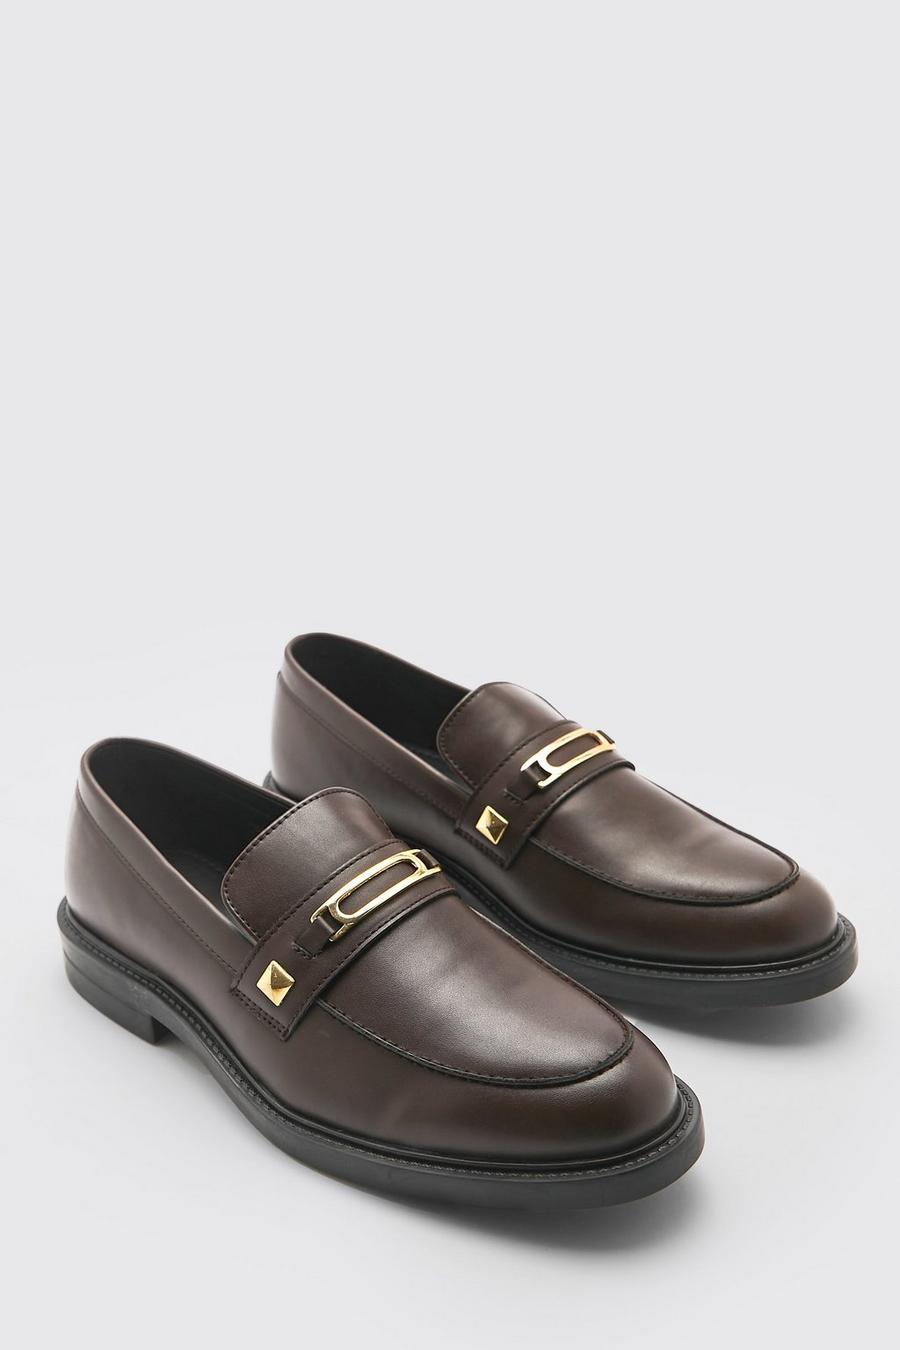 Zapatos castellanos con detalle metálico, Chocolate marrone